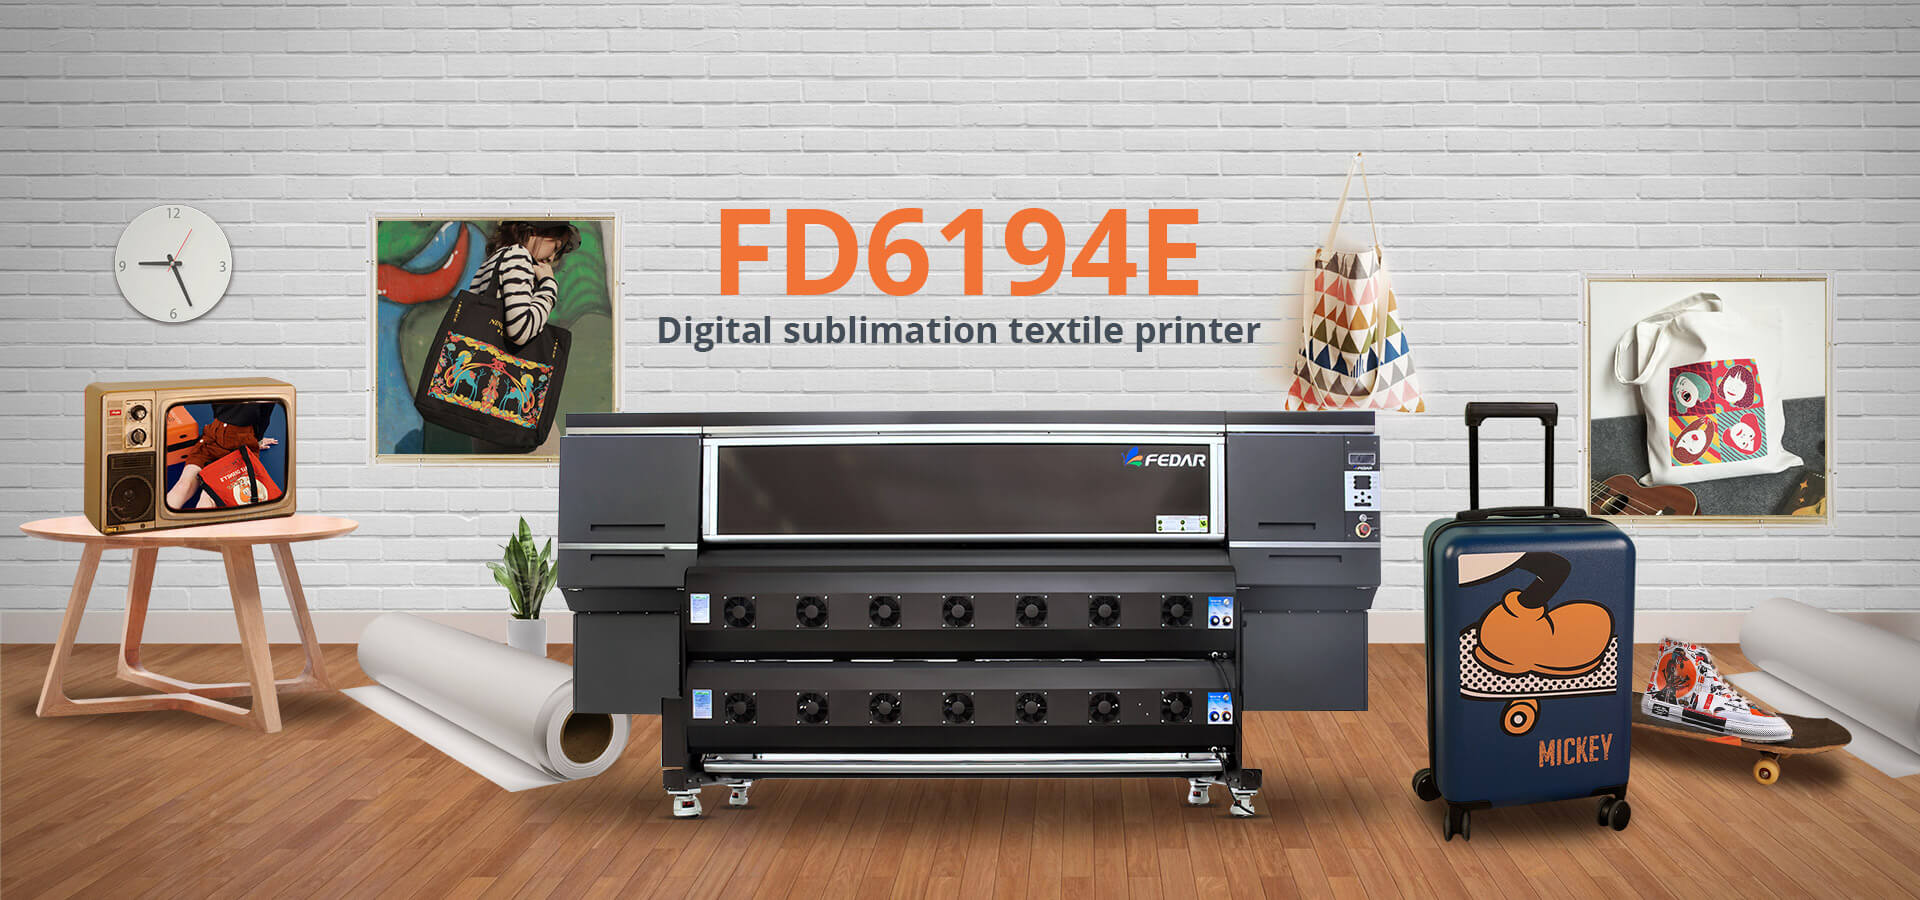 Fedar Dye Sublimation Textile Printer FD6194E